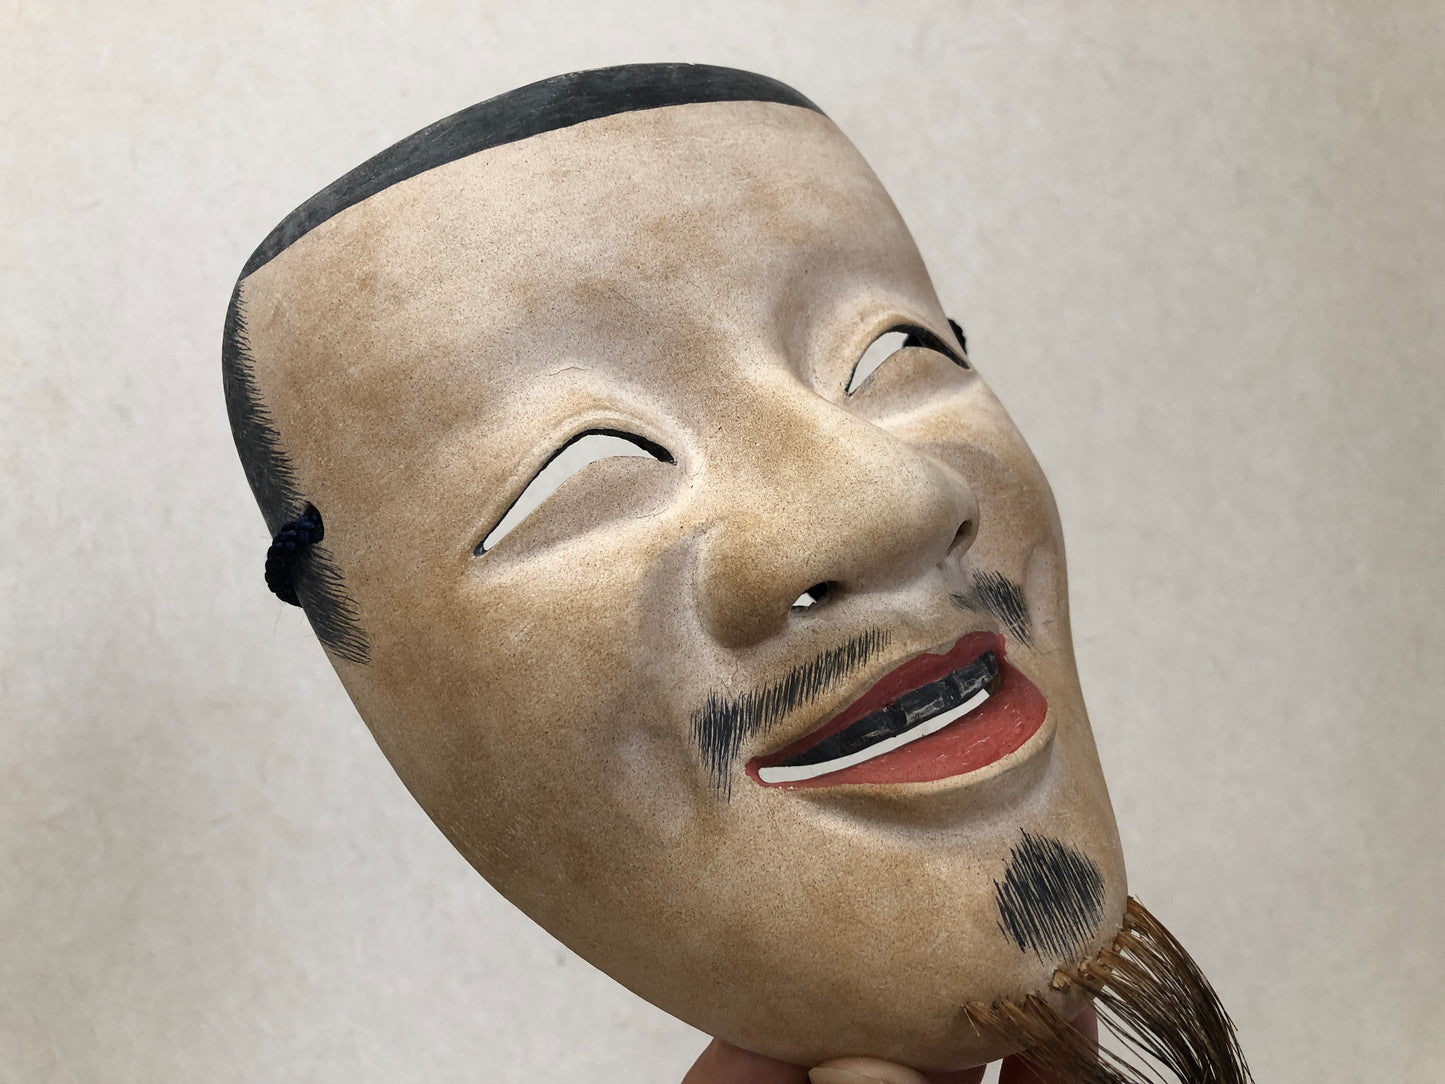 Y3485 NOH MASK wood carving Enmei Kaja signed box Japan antique dance drama